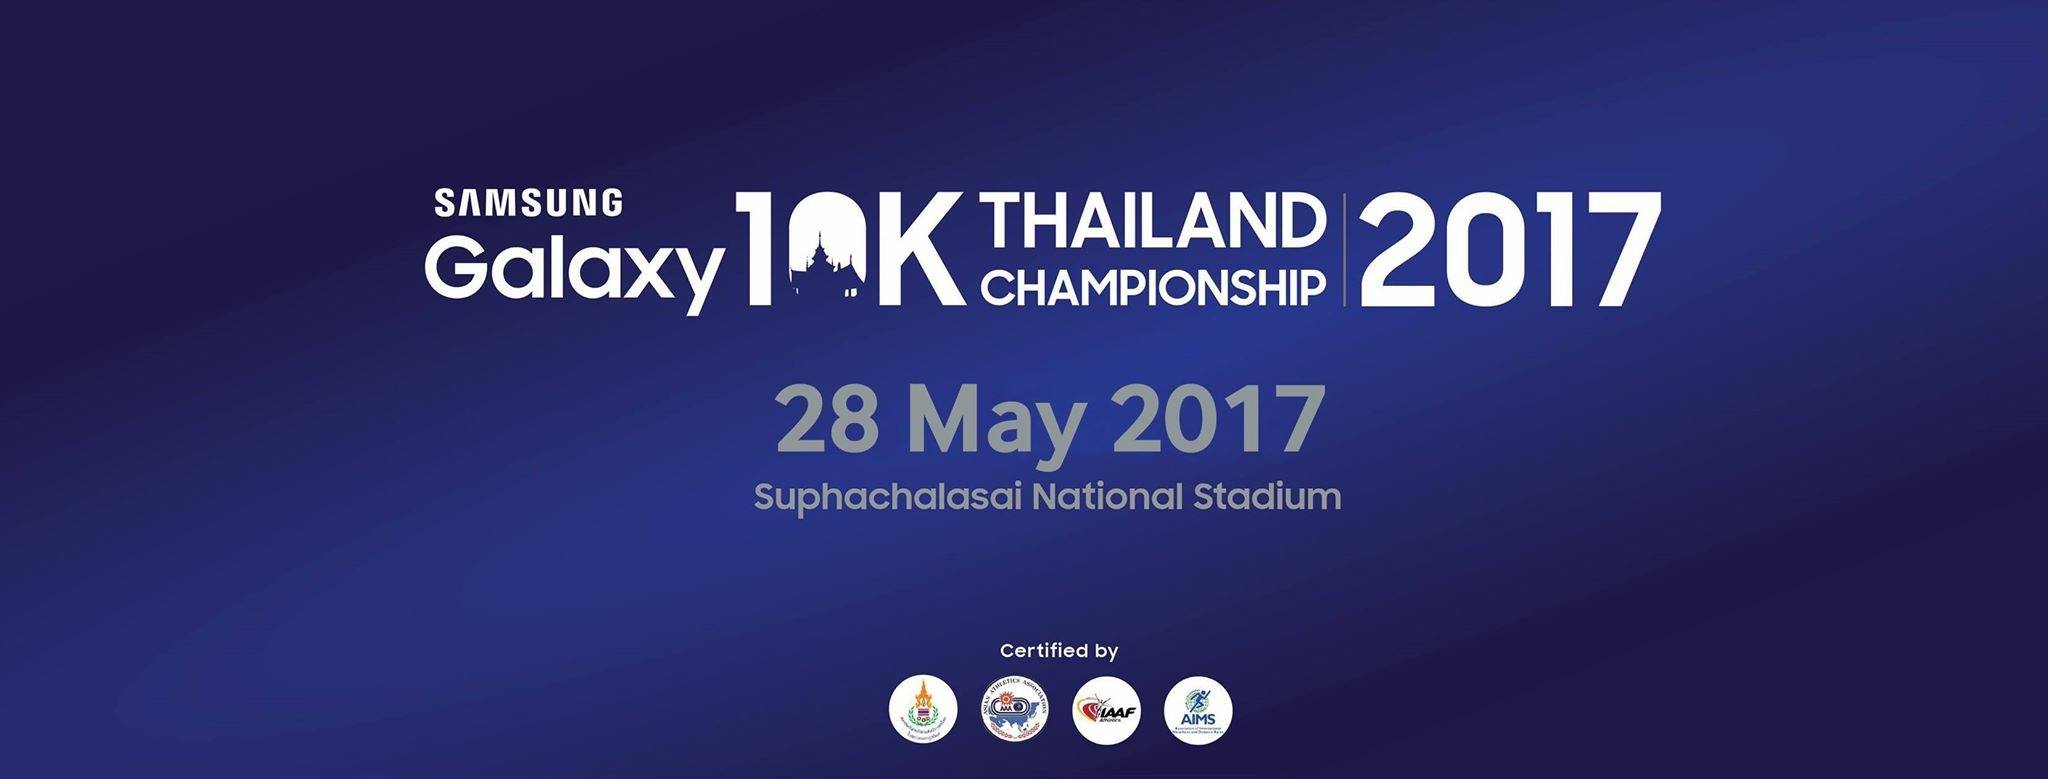 10K Thailand Championship 2017